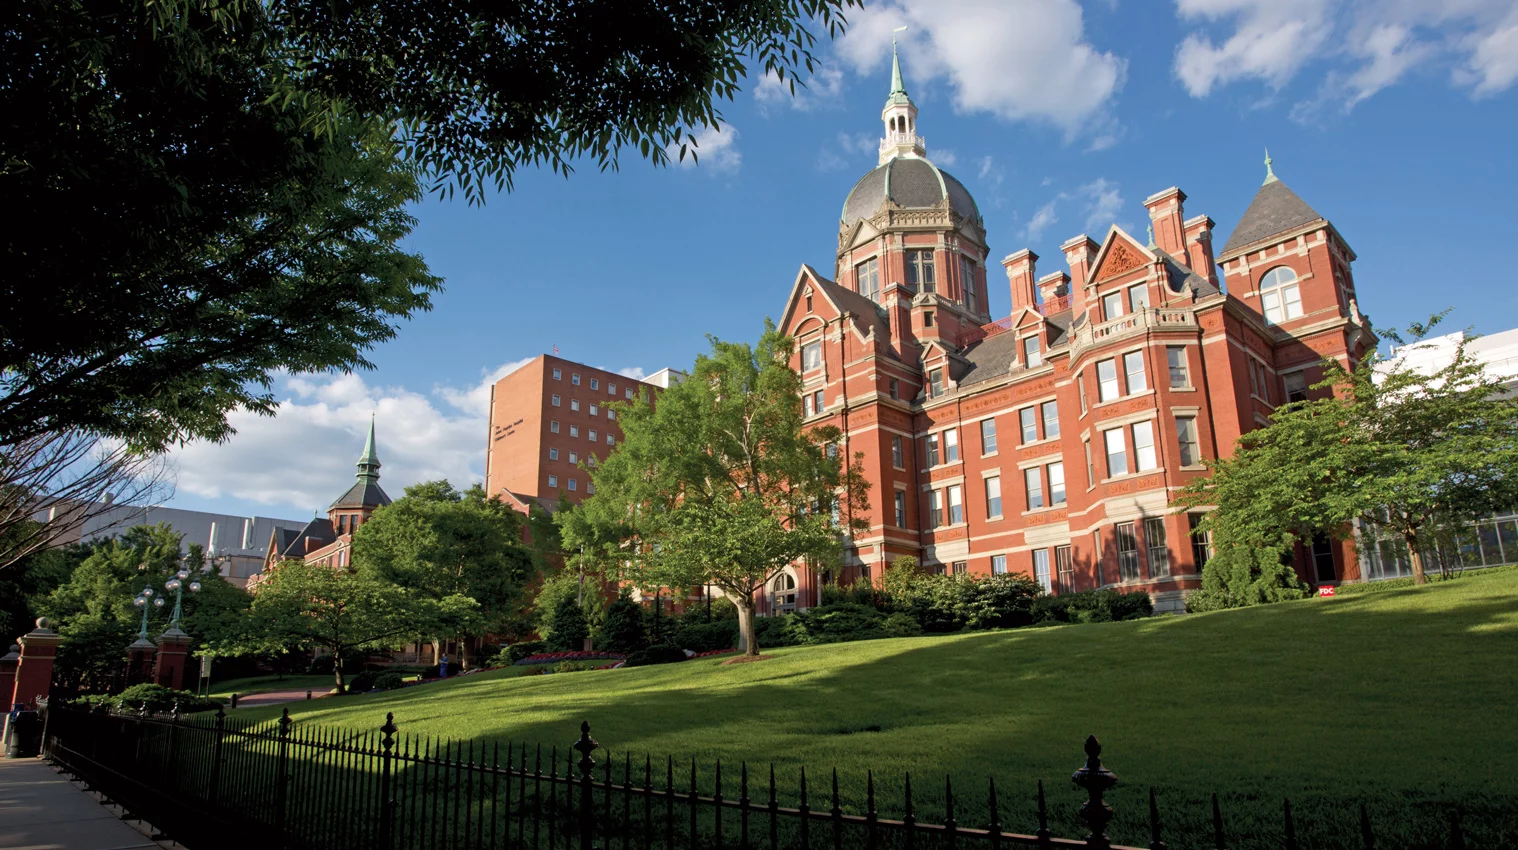 Johns Hopkins University, Baltimore, Maryland